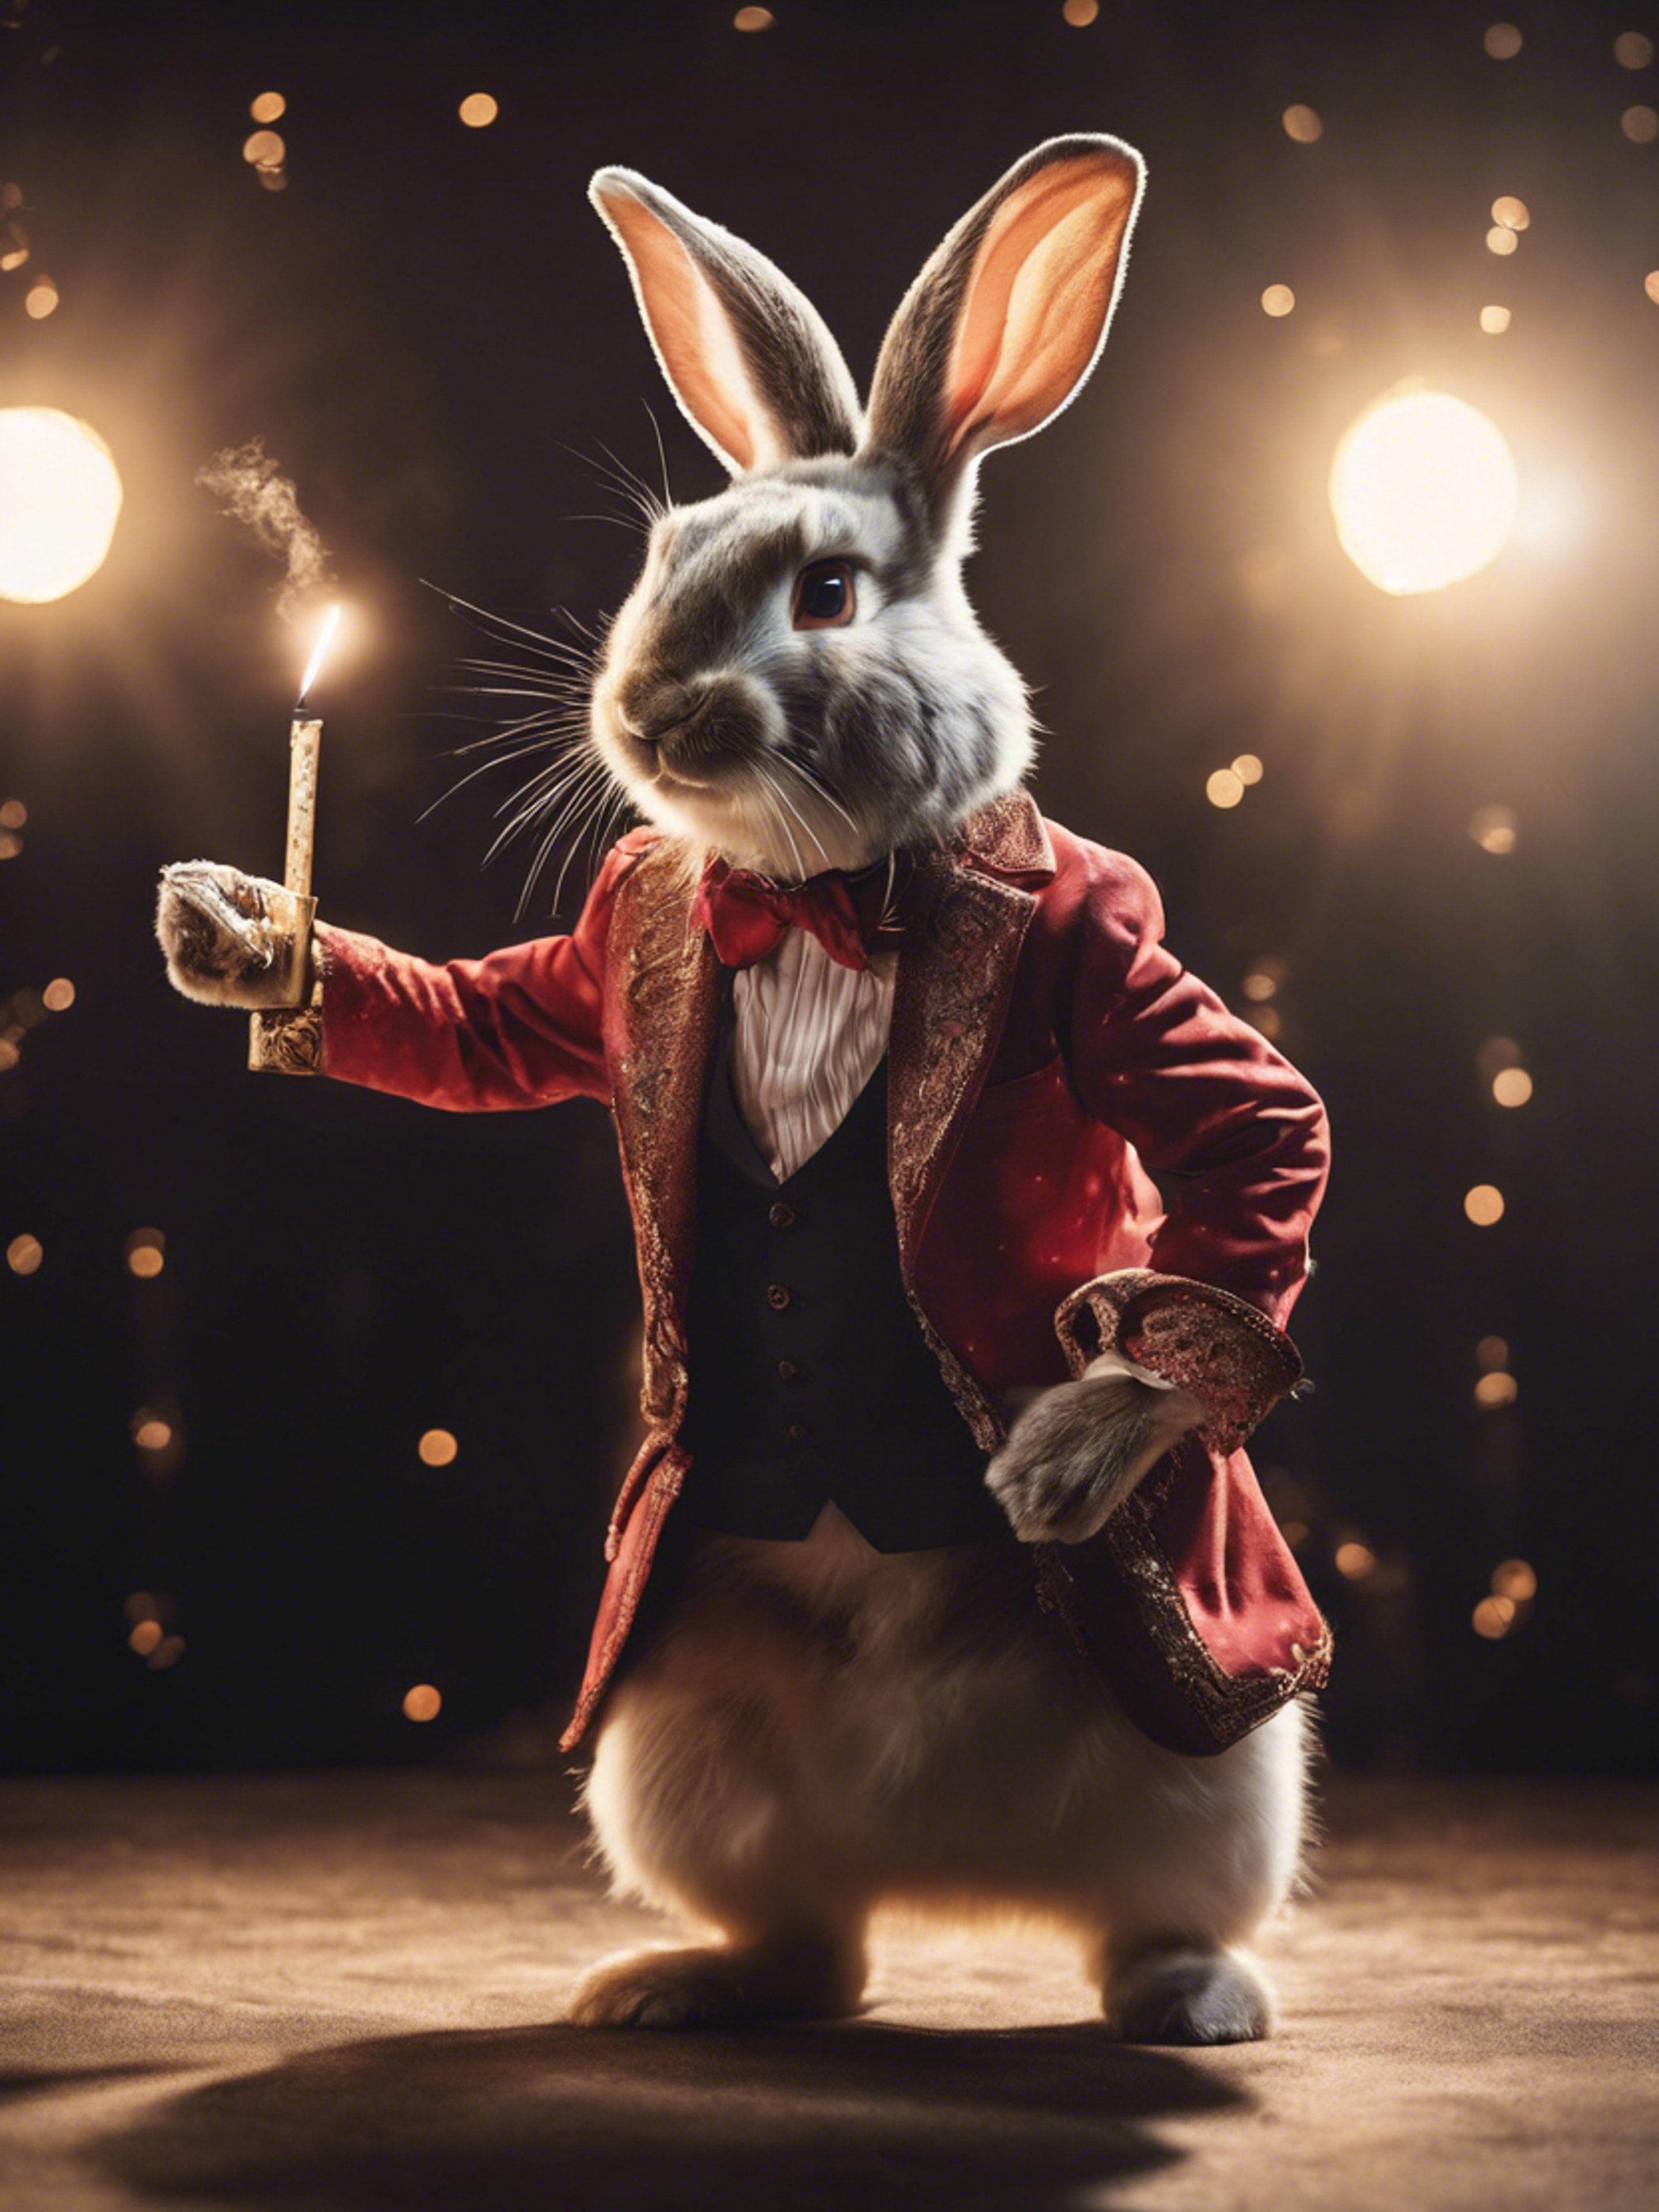 A rabbit magician performing extraordinary tricks on a stage under a spotlight. Wallpaper[30dd10a95ff64540898f]